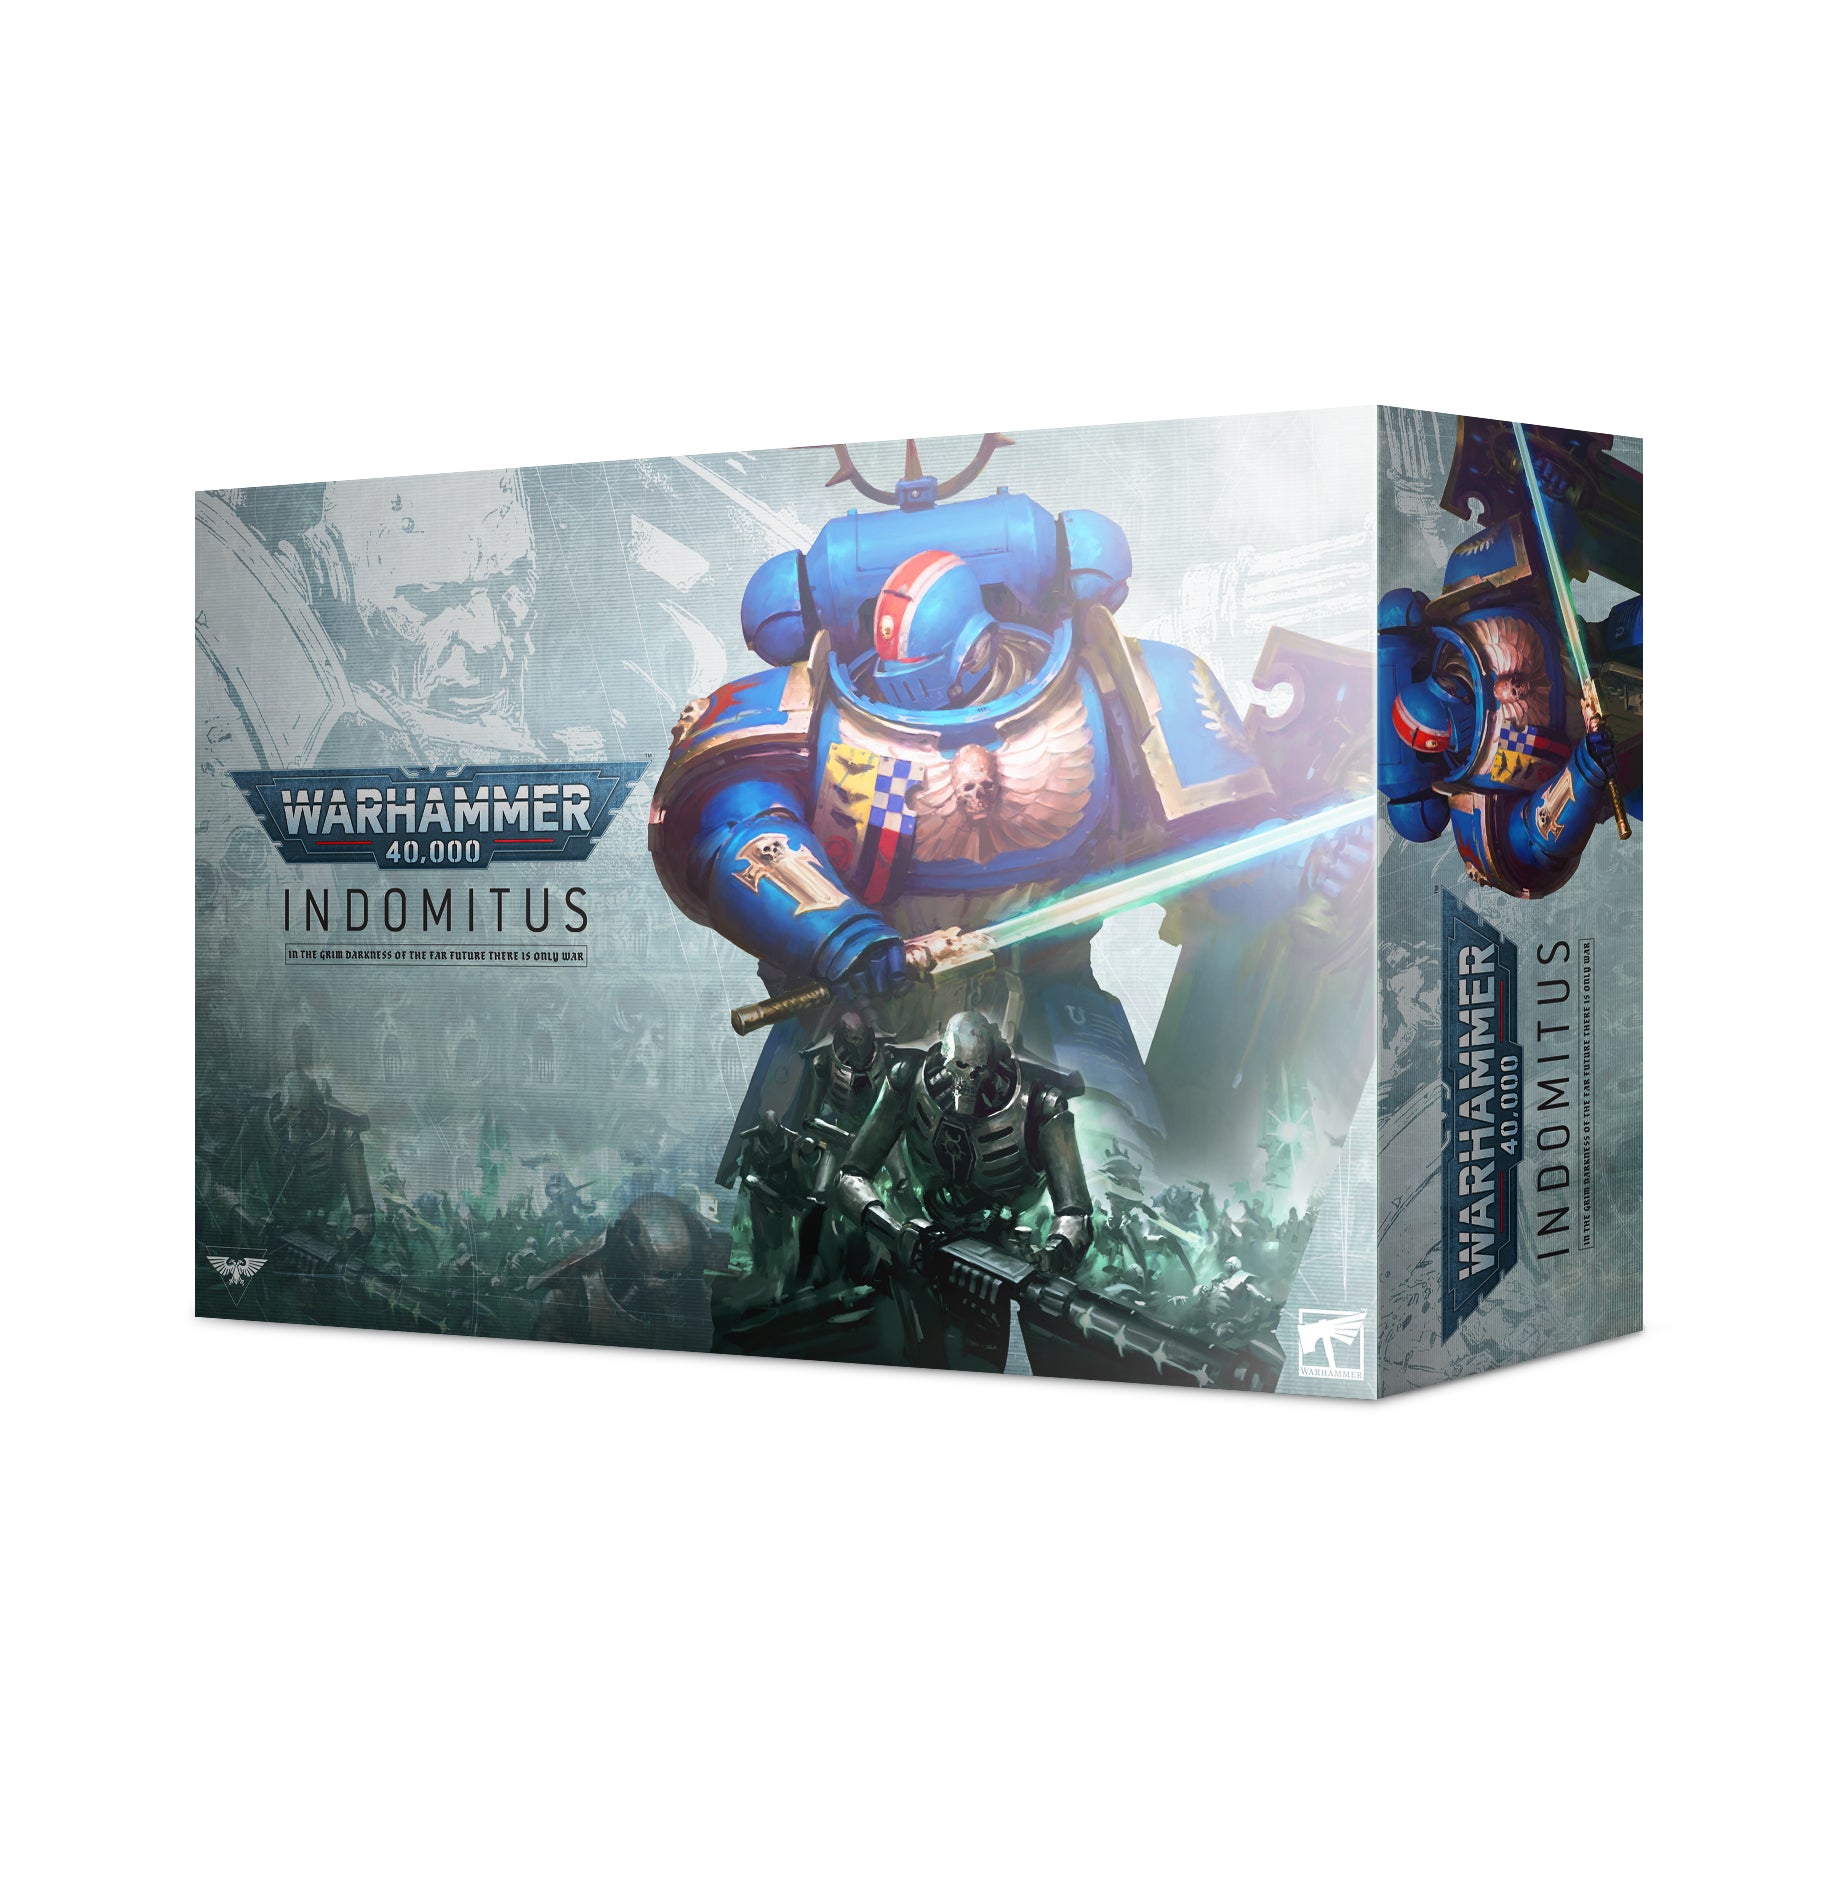 Warhammer 40,000: Indomitus Collector's Box | Gate City Games LLC